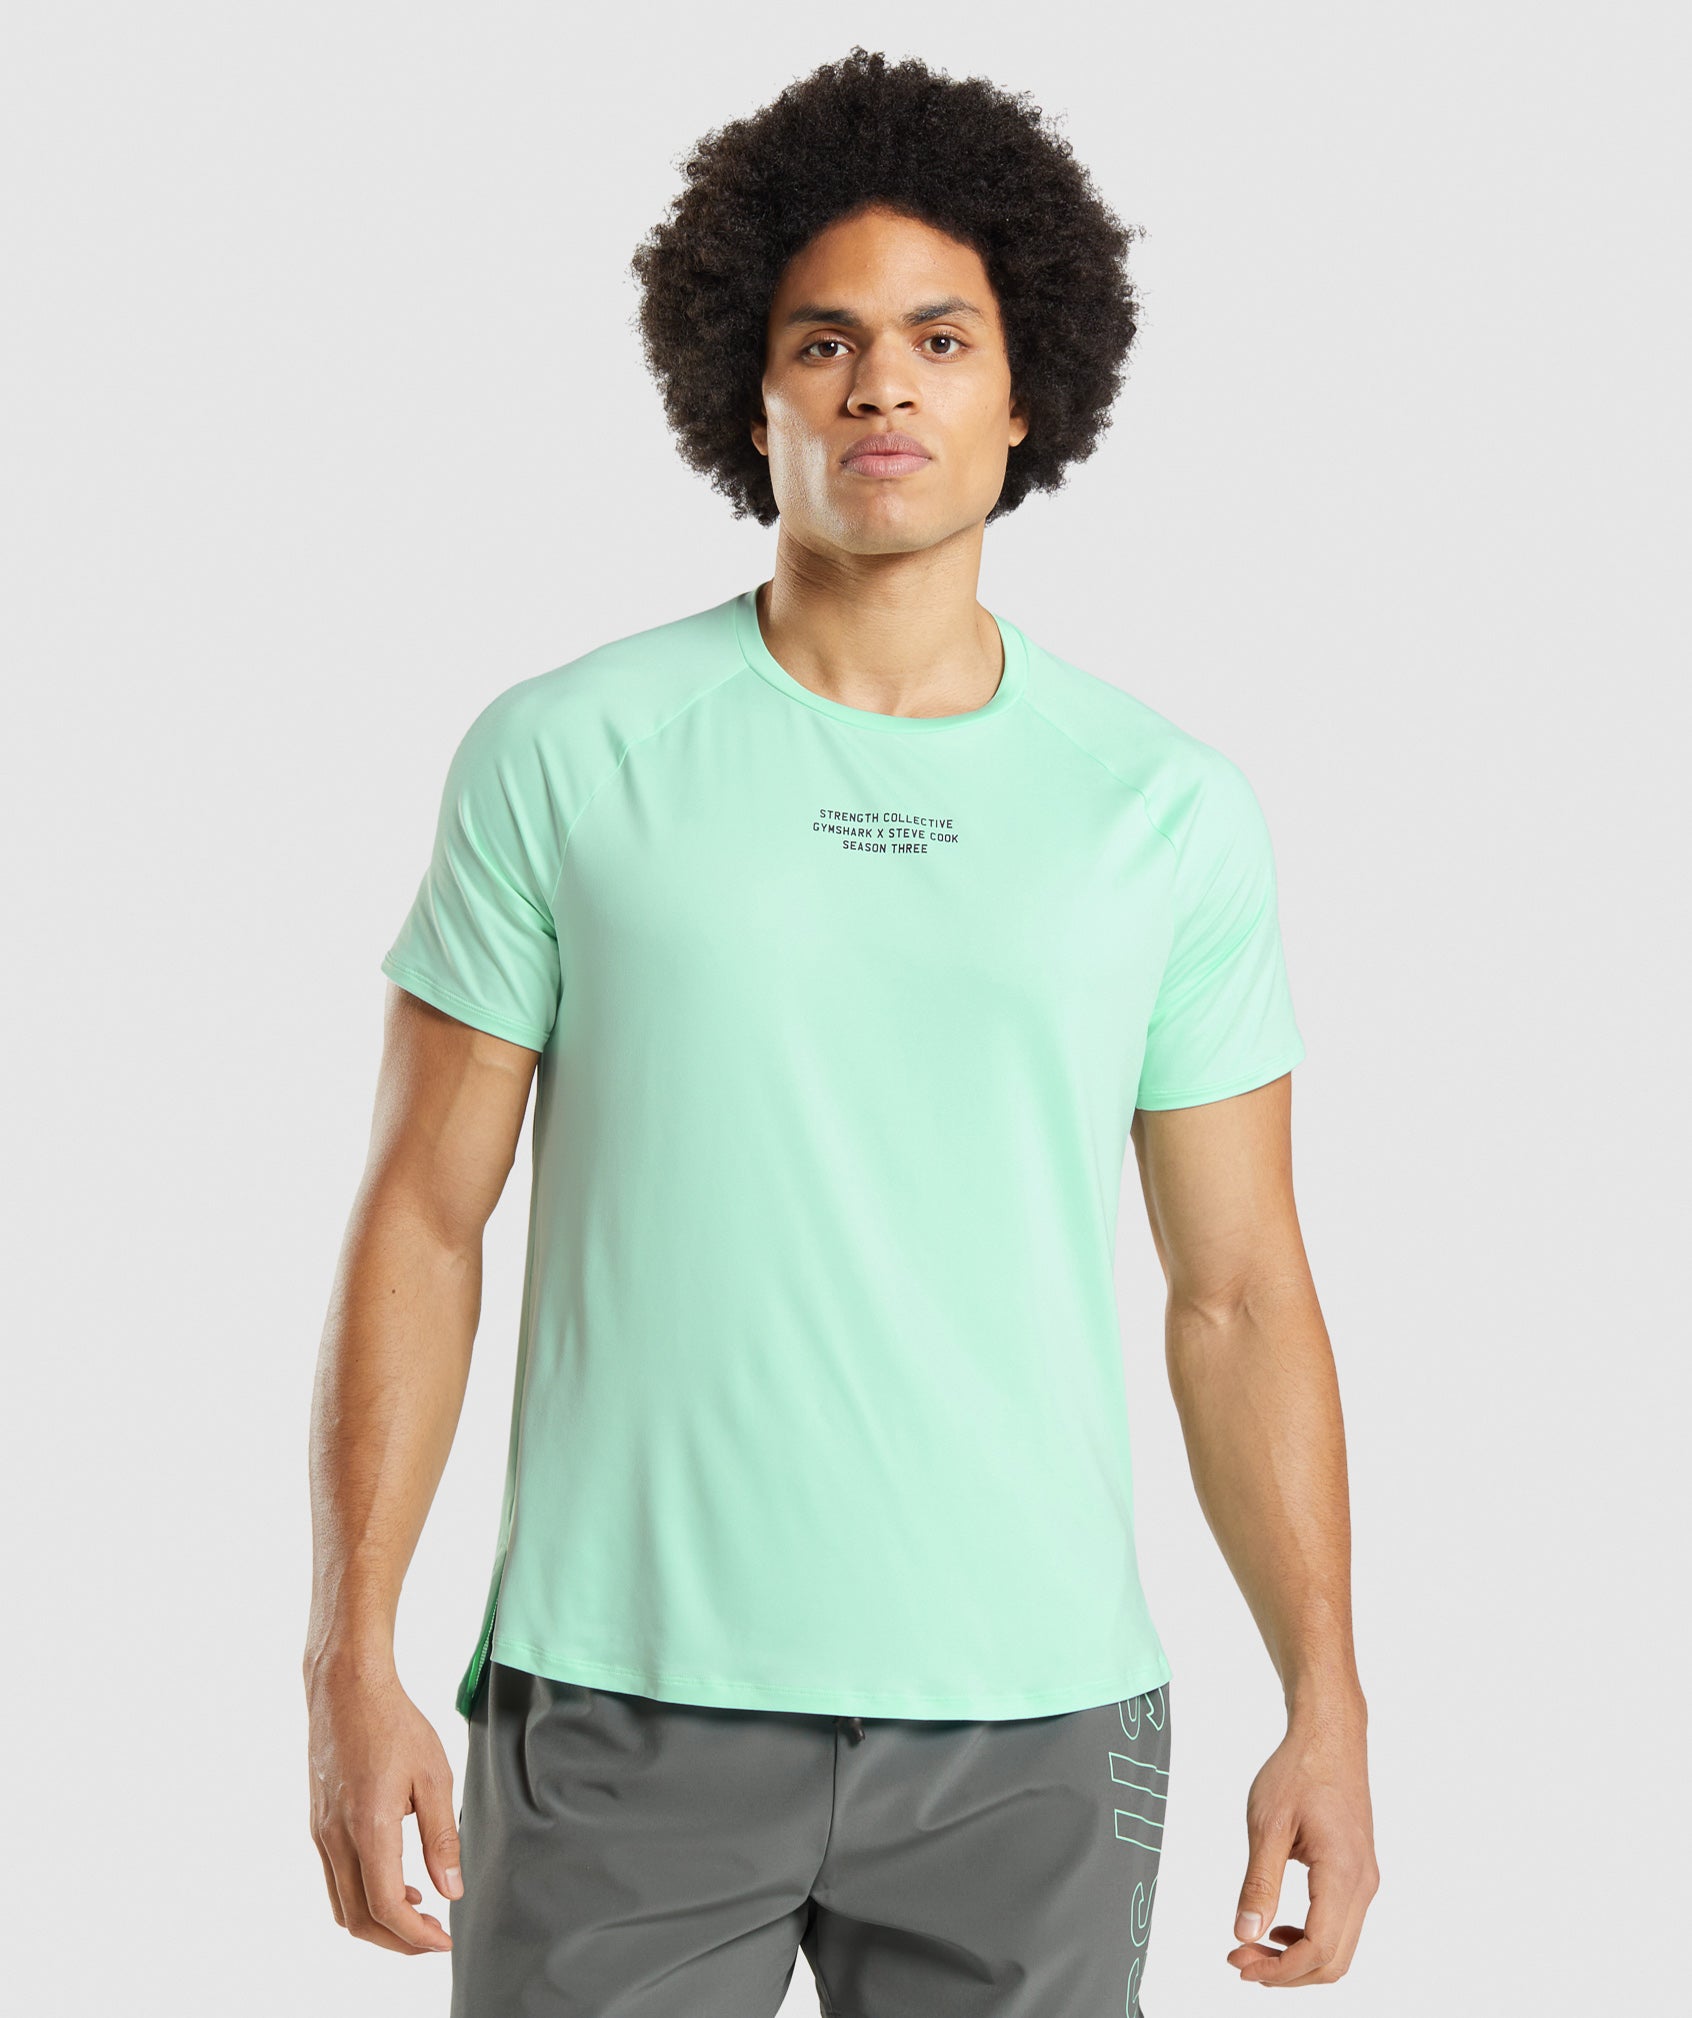 Gymshark//Steve Cook T-Shirt in Turbo Blue - view 2